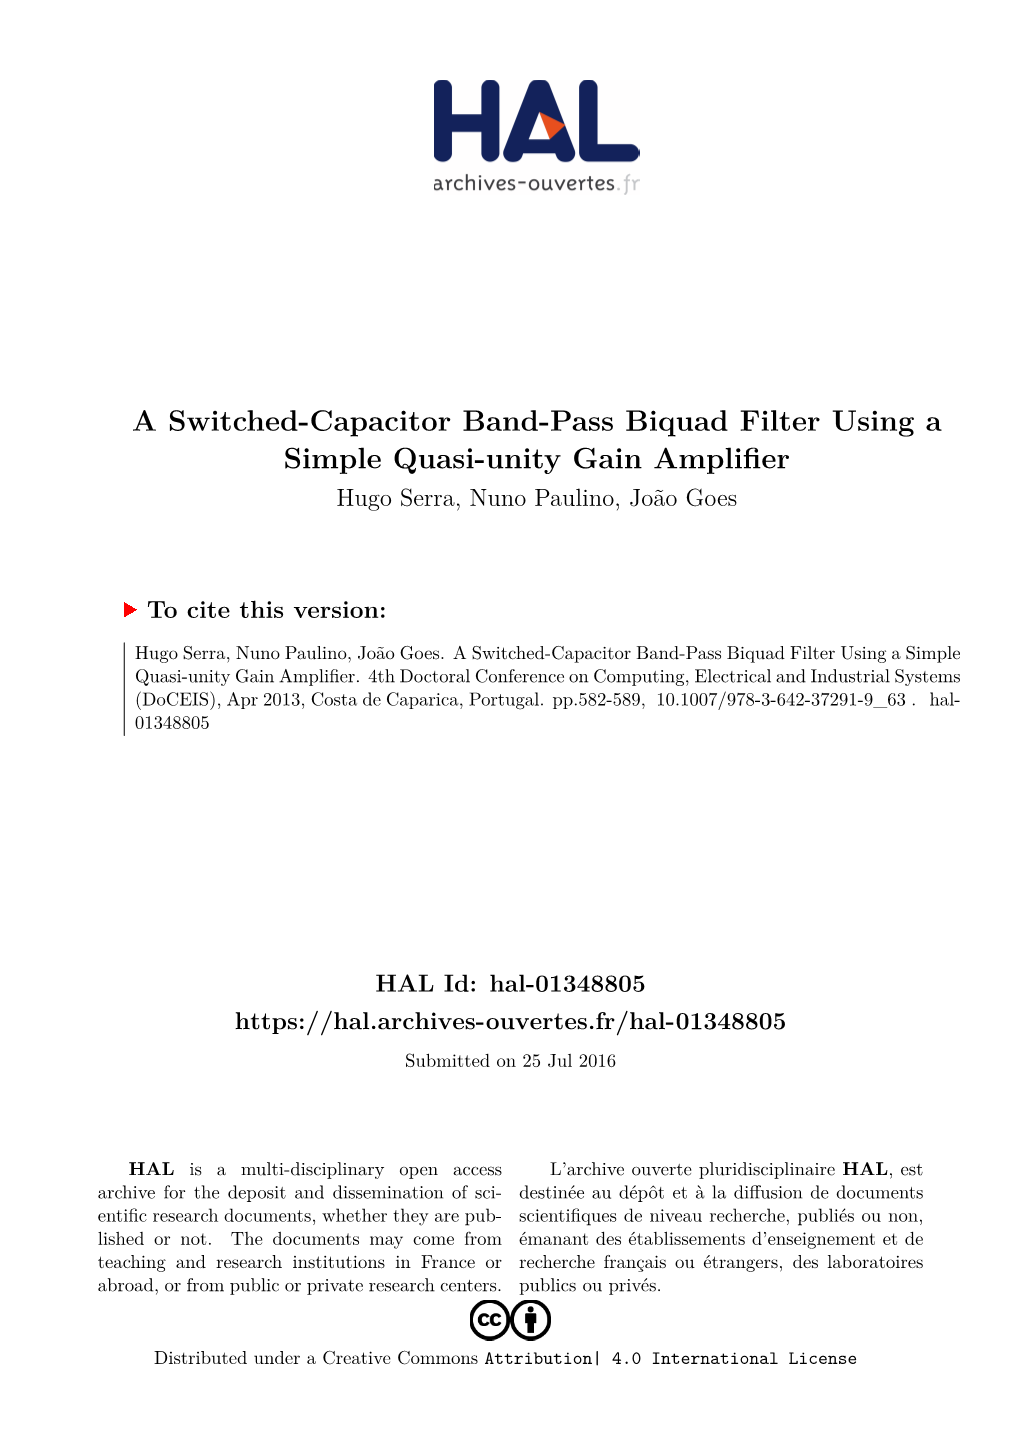 A Switched-Capacitor Band-Pass Biquad Filter Using a Simple Quasi-Unity Gain Amplifier Hugo Serra, Nuno Paulino, João Goes